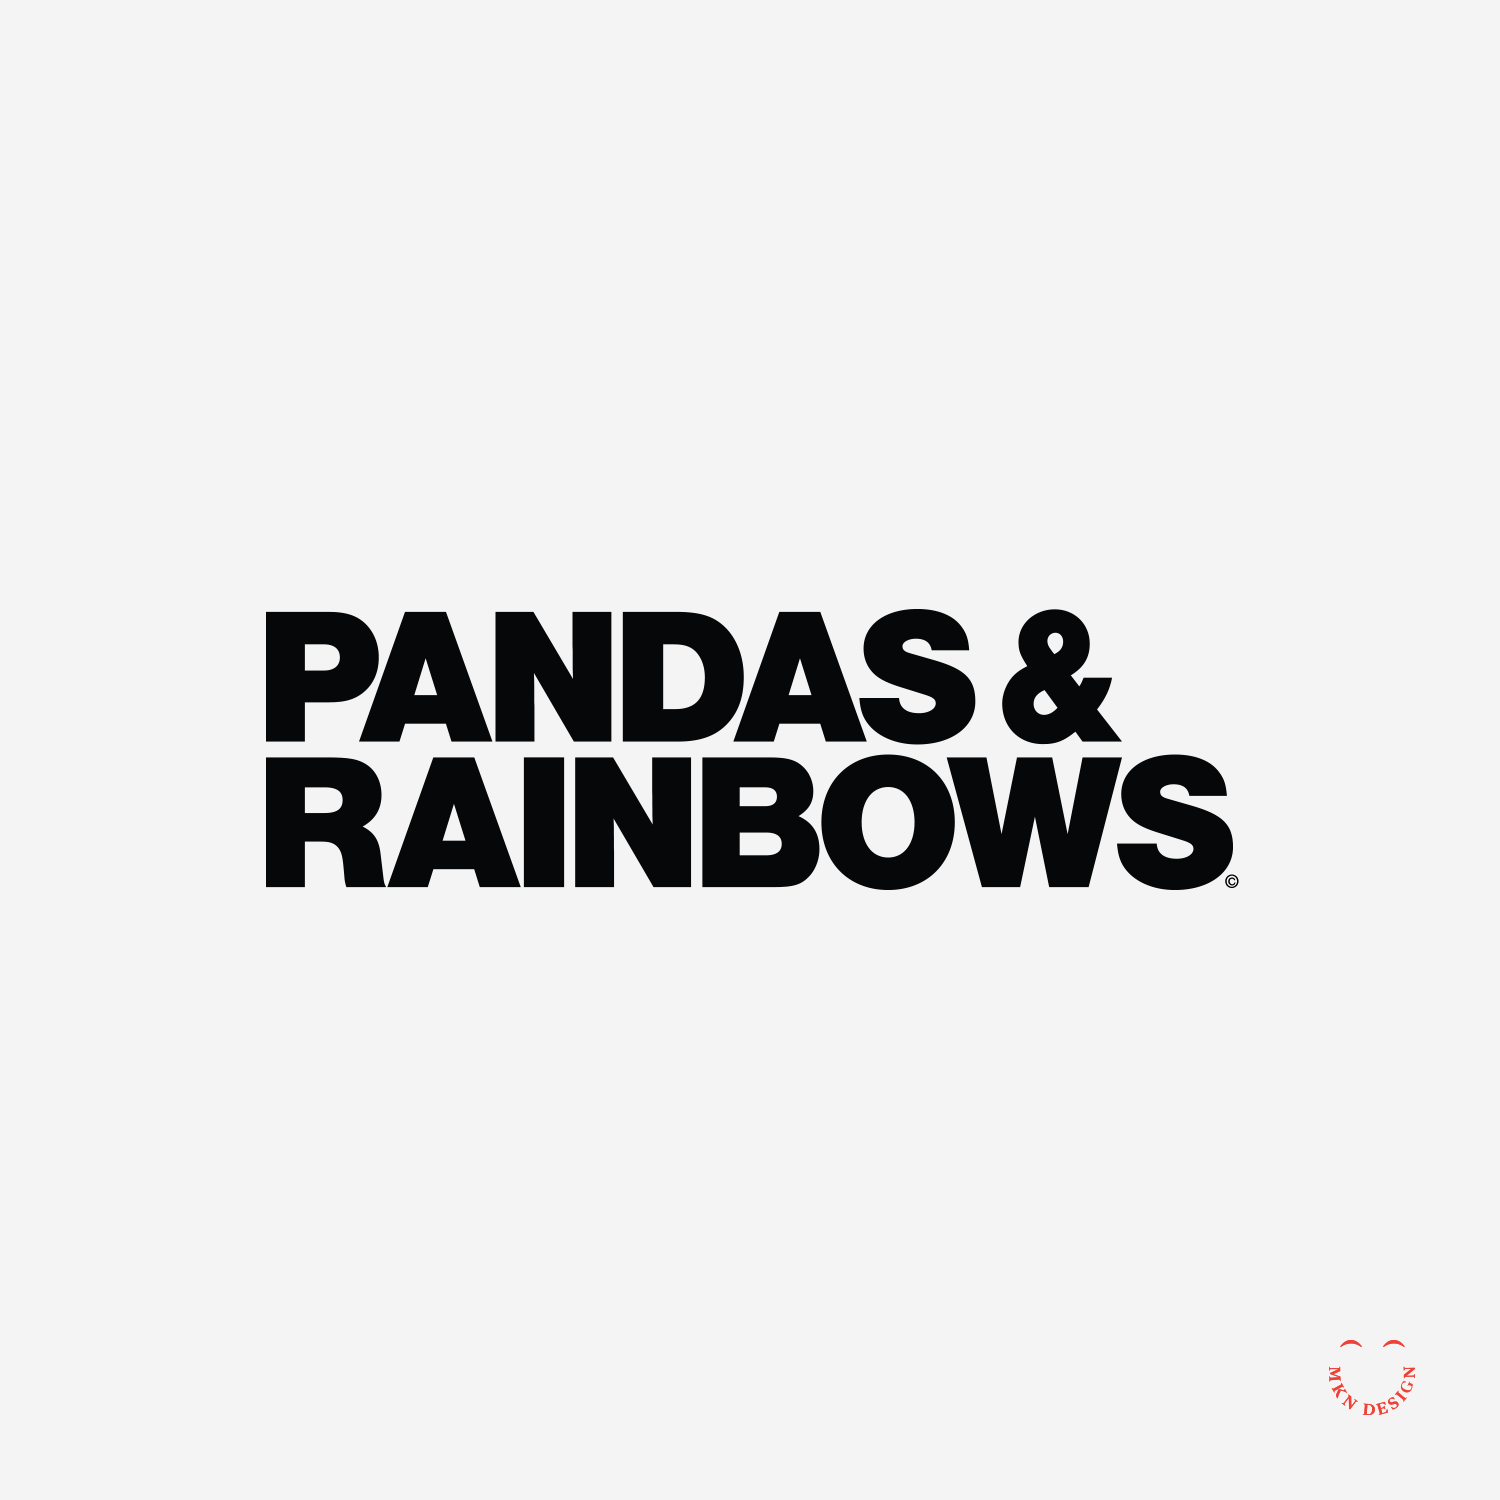 Pandas_Rainbows_SEC_1.png